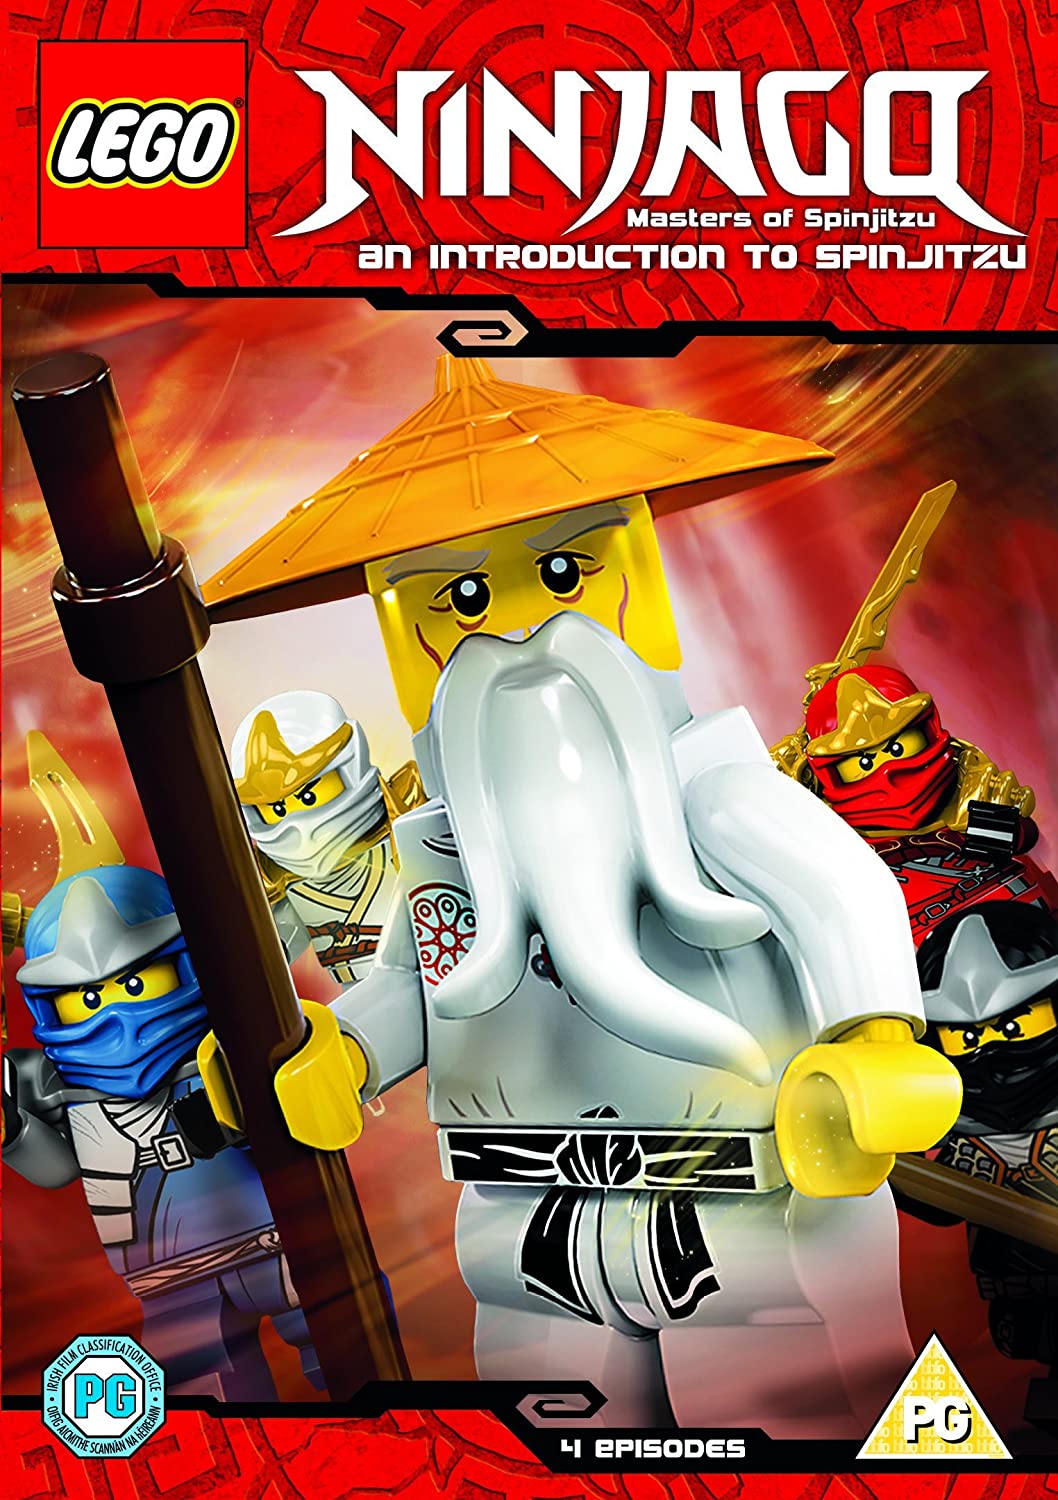 LEGO: Ninjago: Masters Of Spinjitzu [2011] - Adventure/Family [DVD]